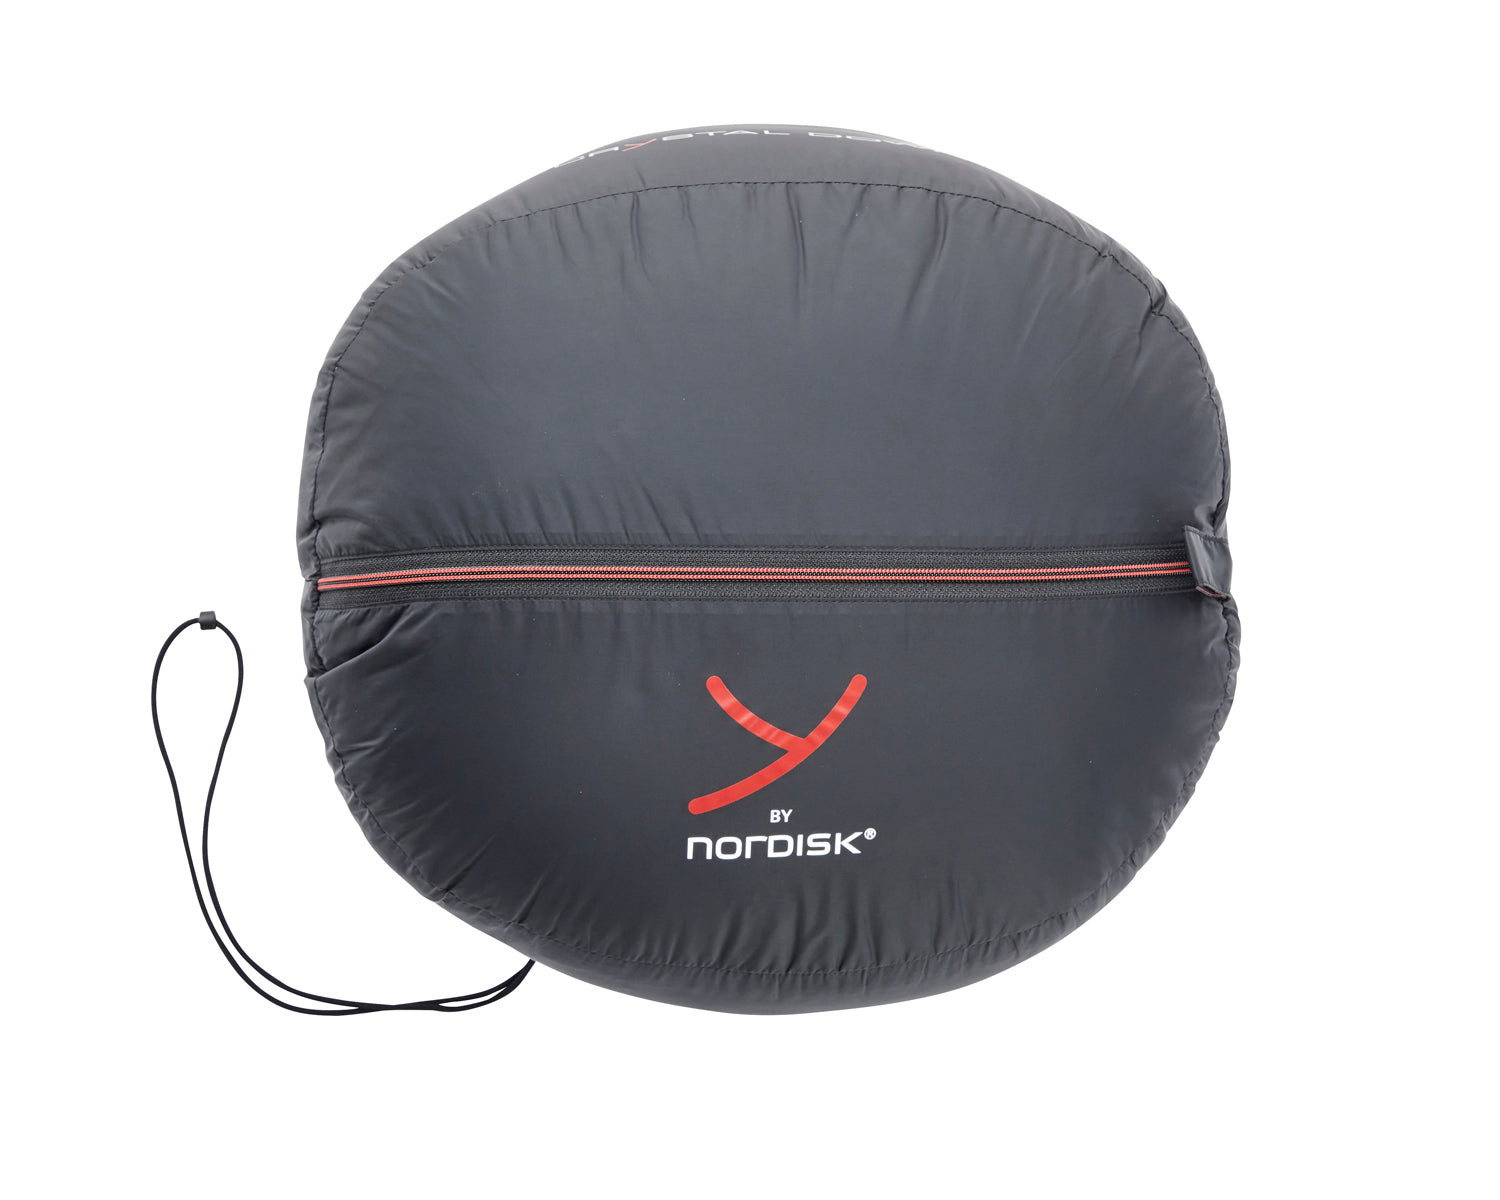 Voyage 300 sleeping bag (RIGHT ZIP) - Ribbon red / Black